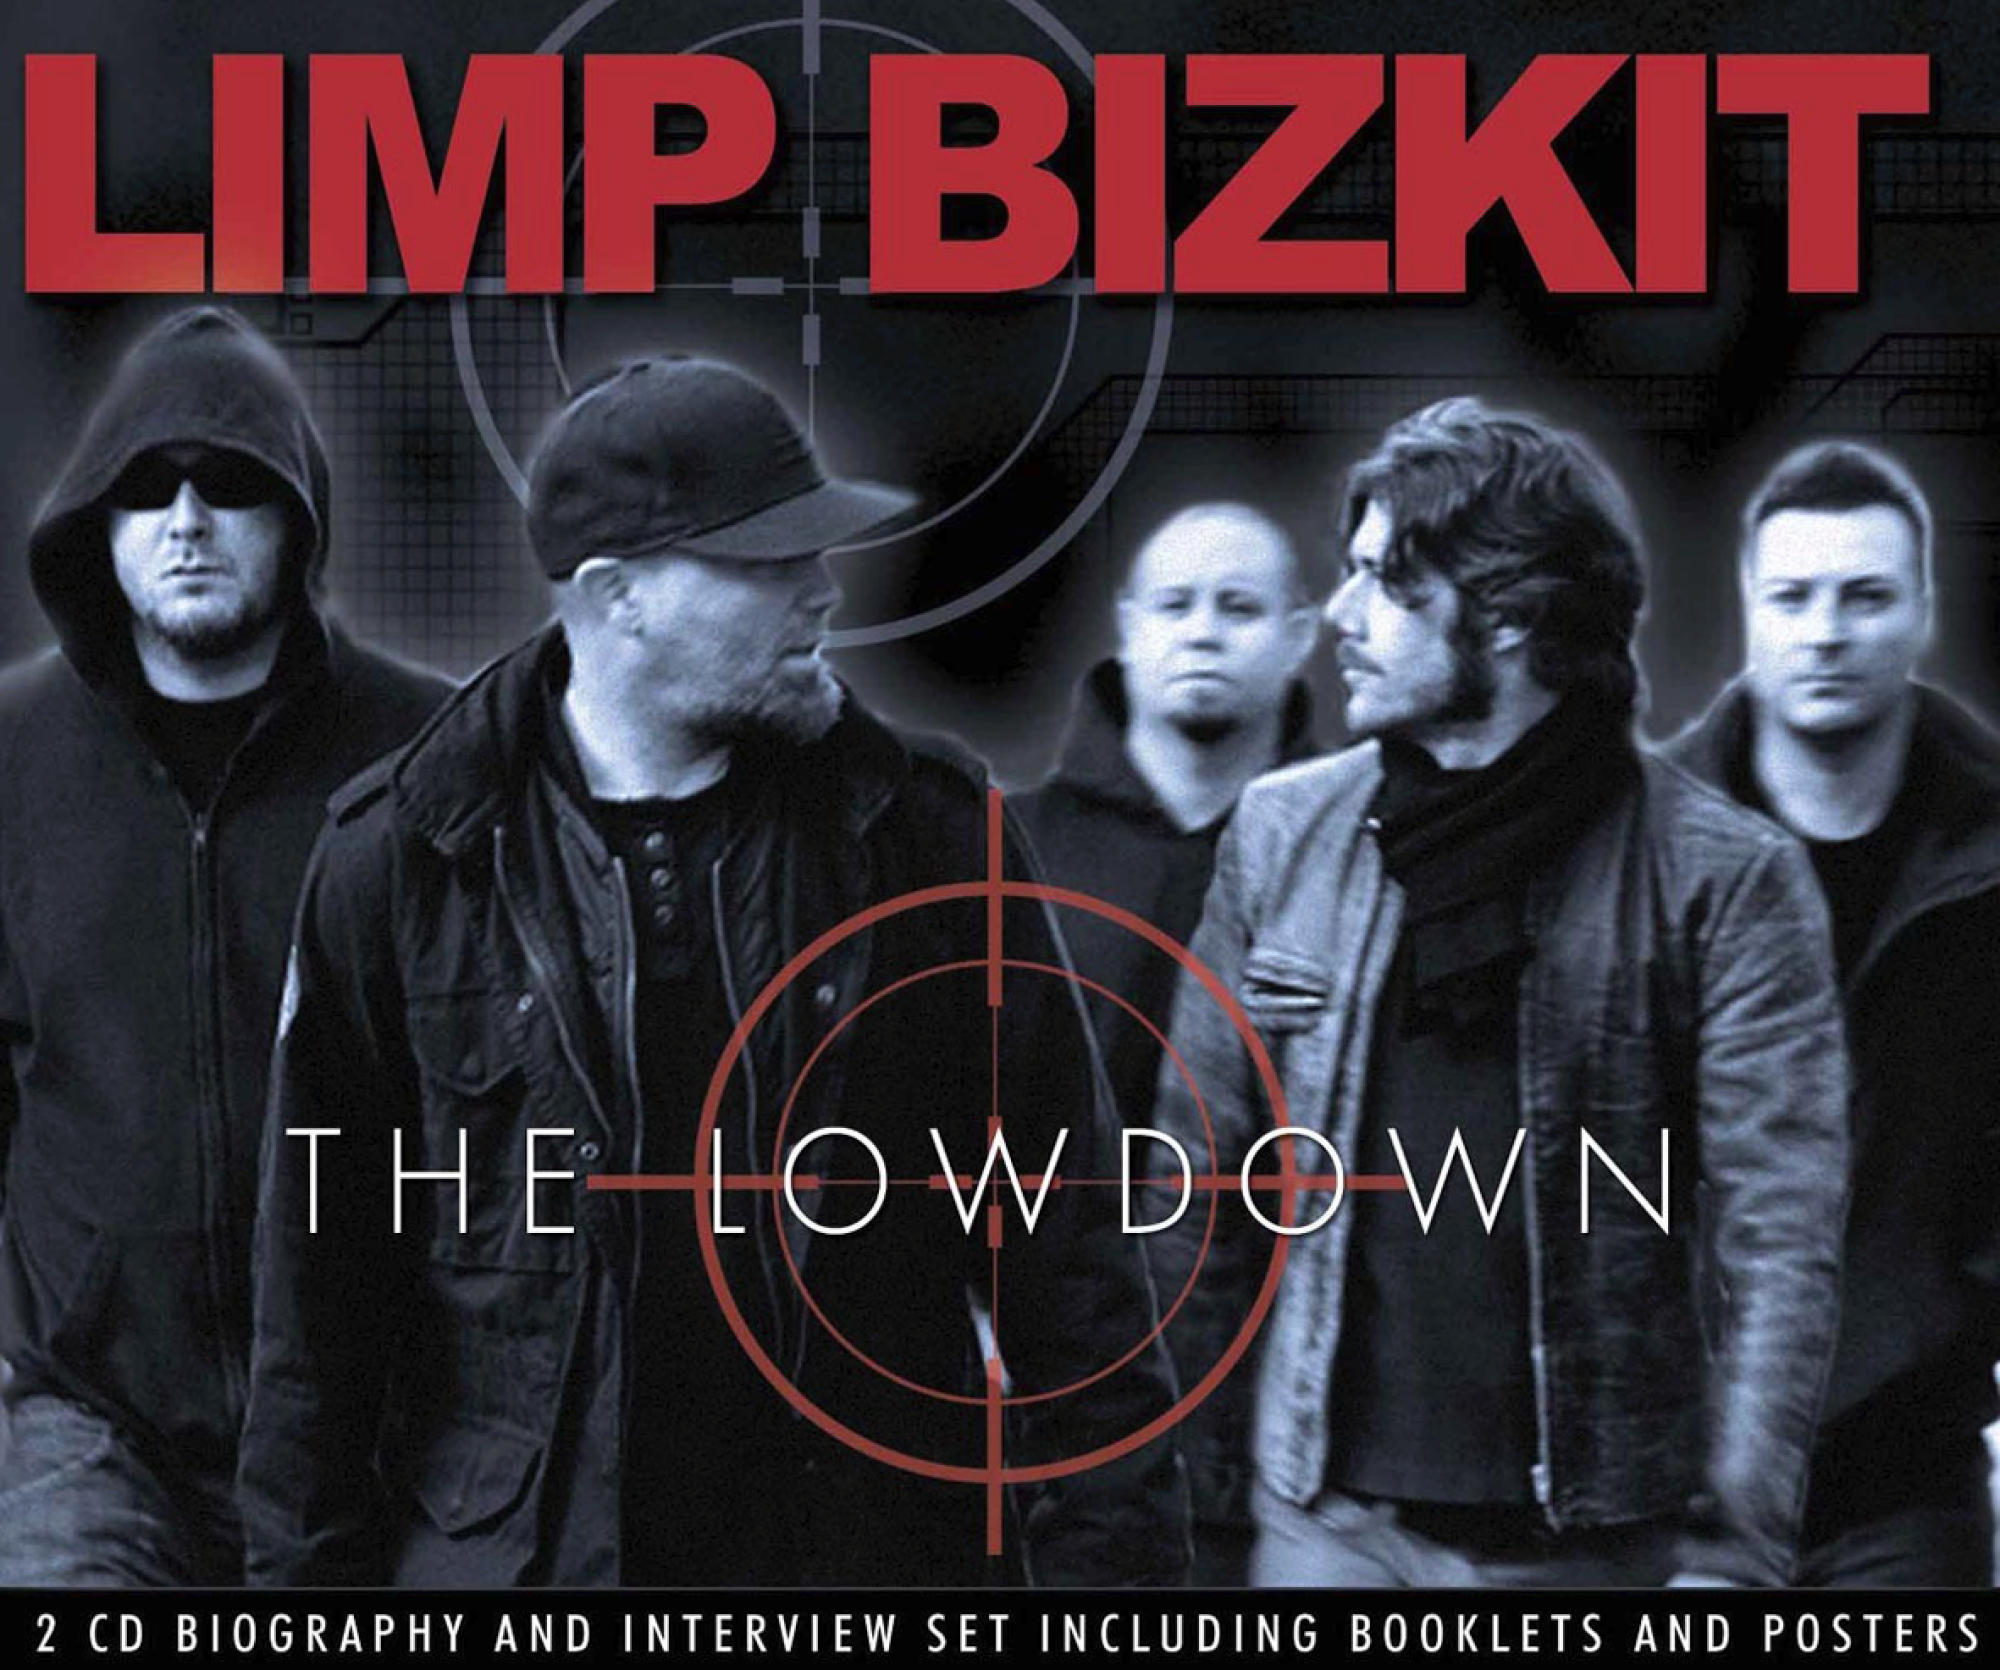 Limp Bizkit - Lowdown The (CD) 